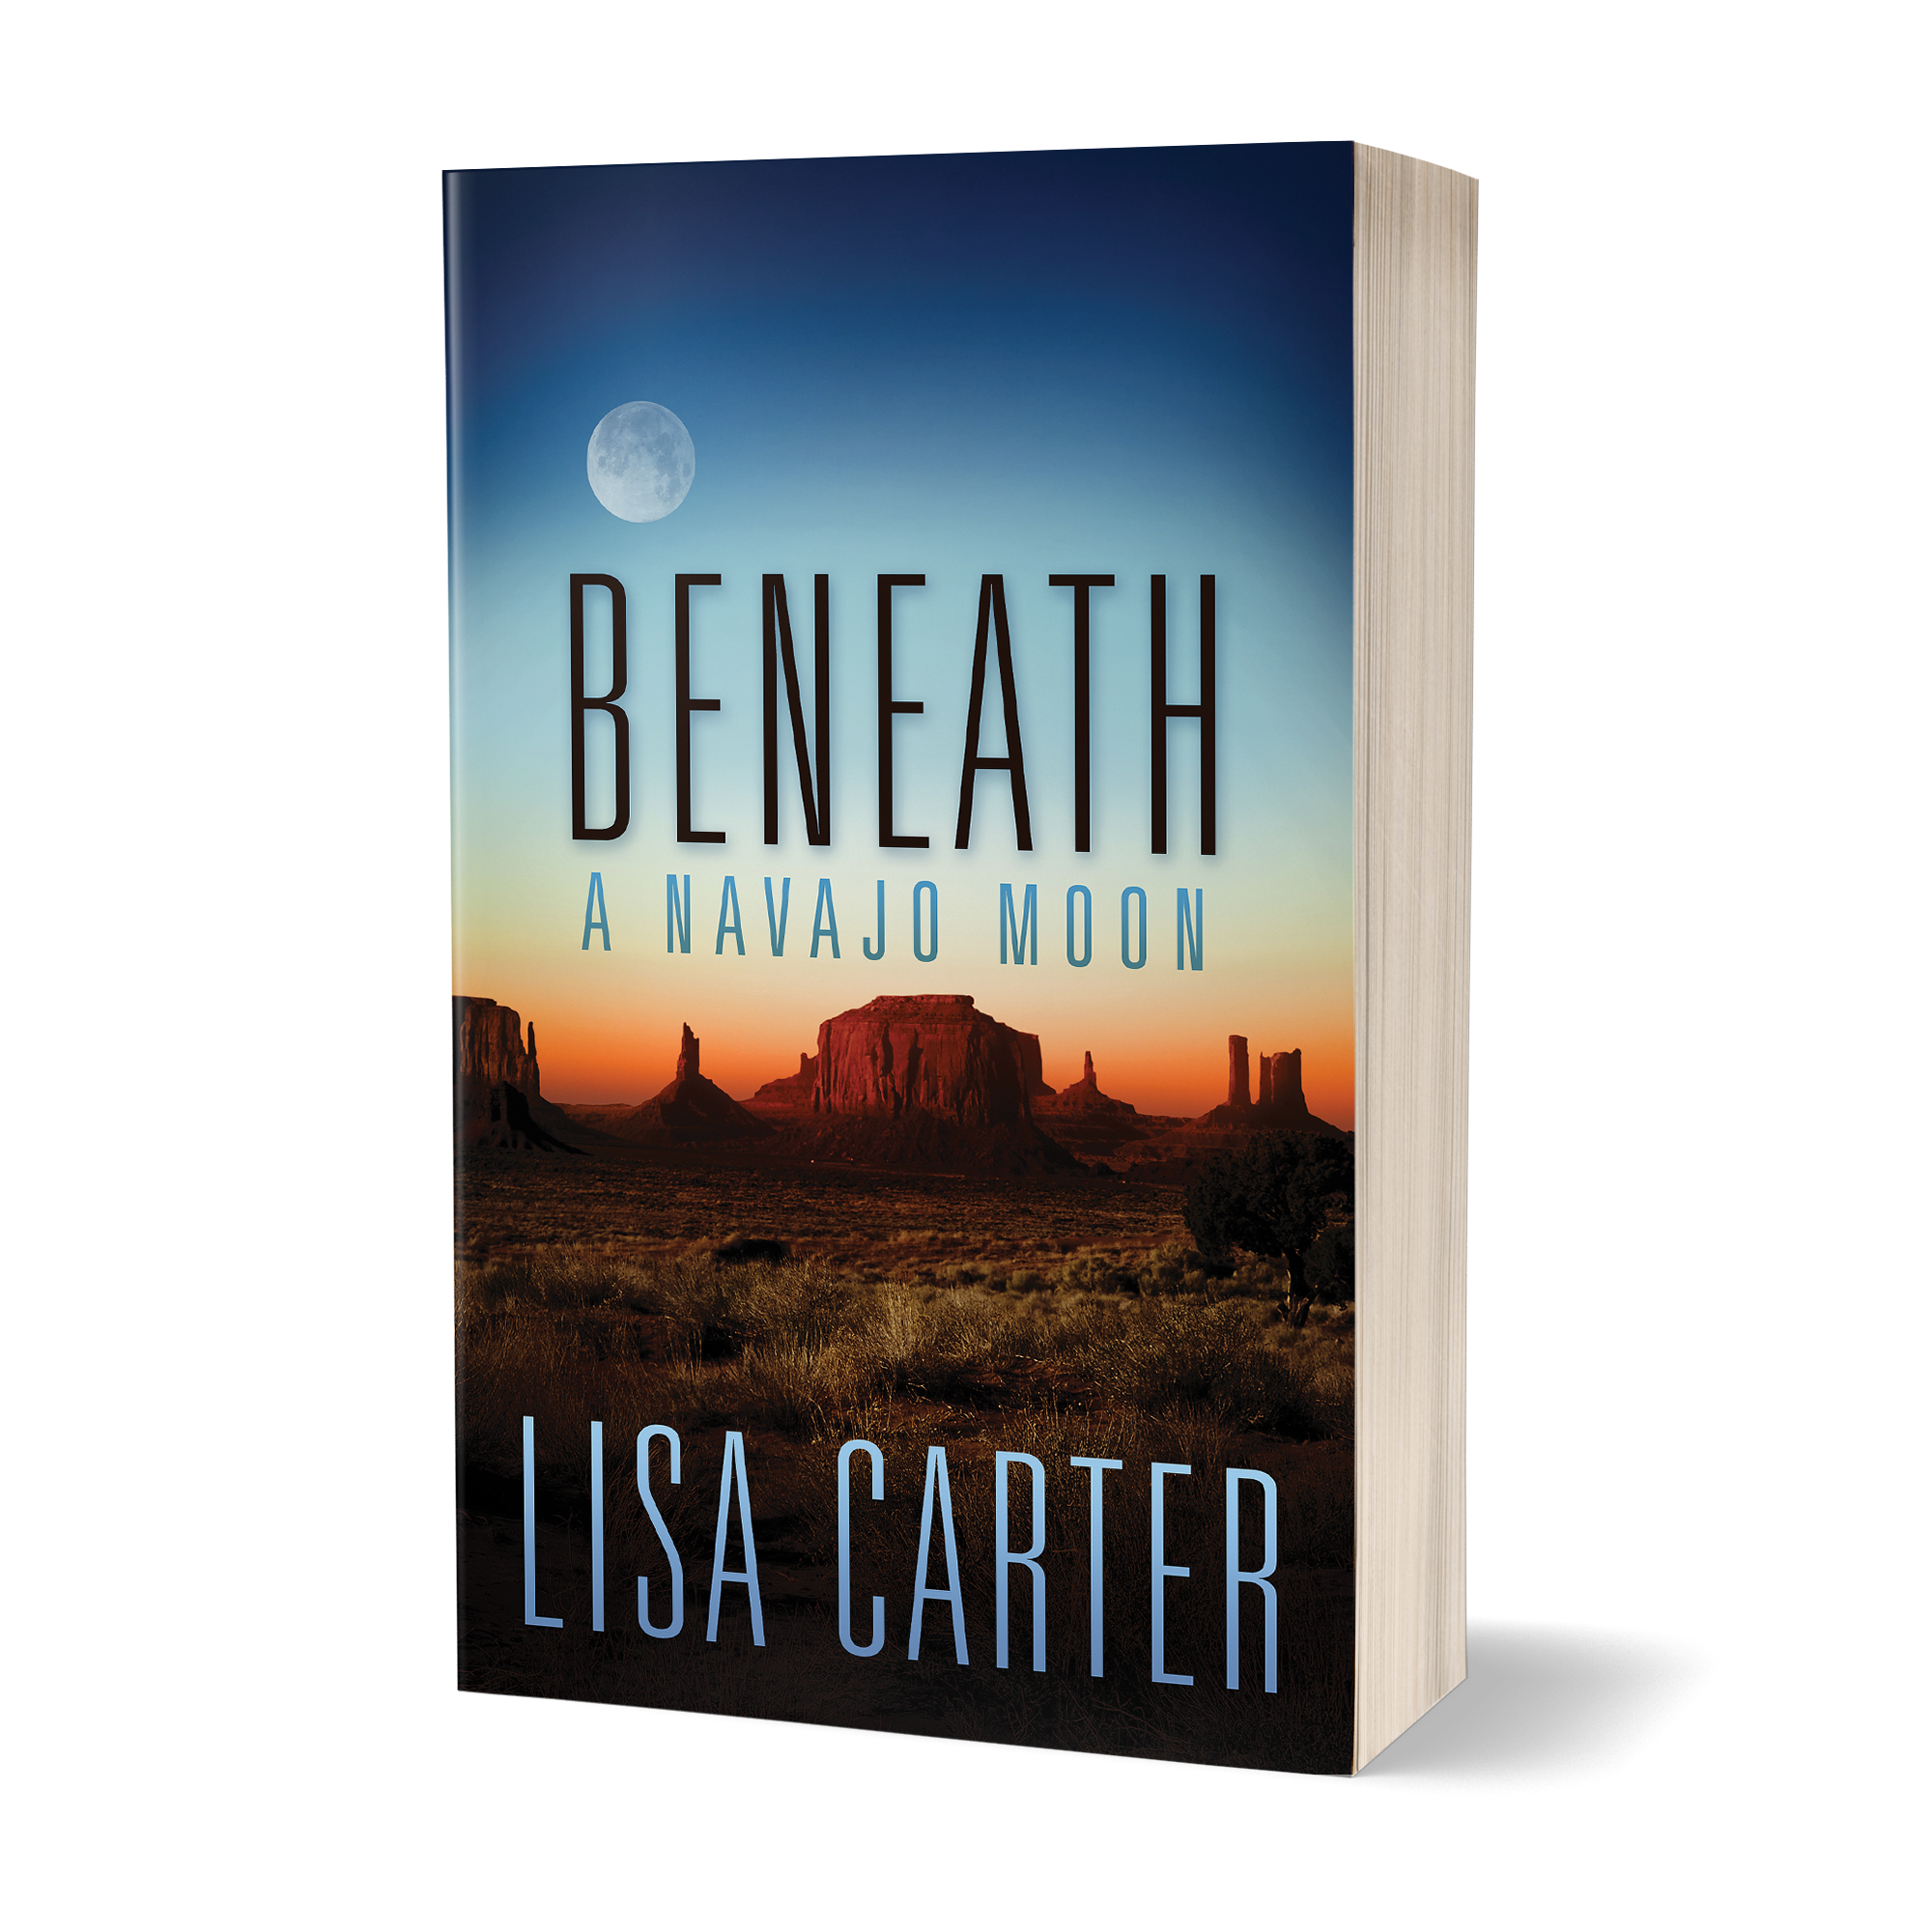  Beneath A Navajo Moon - Lisa Carter 